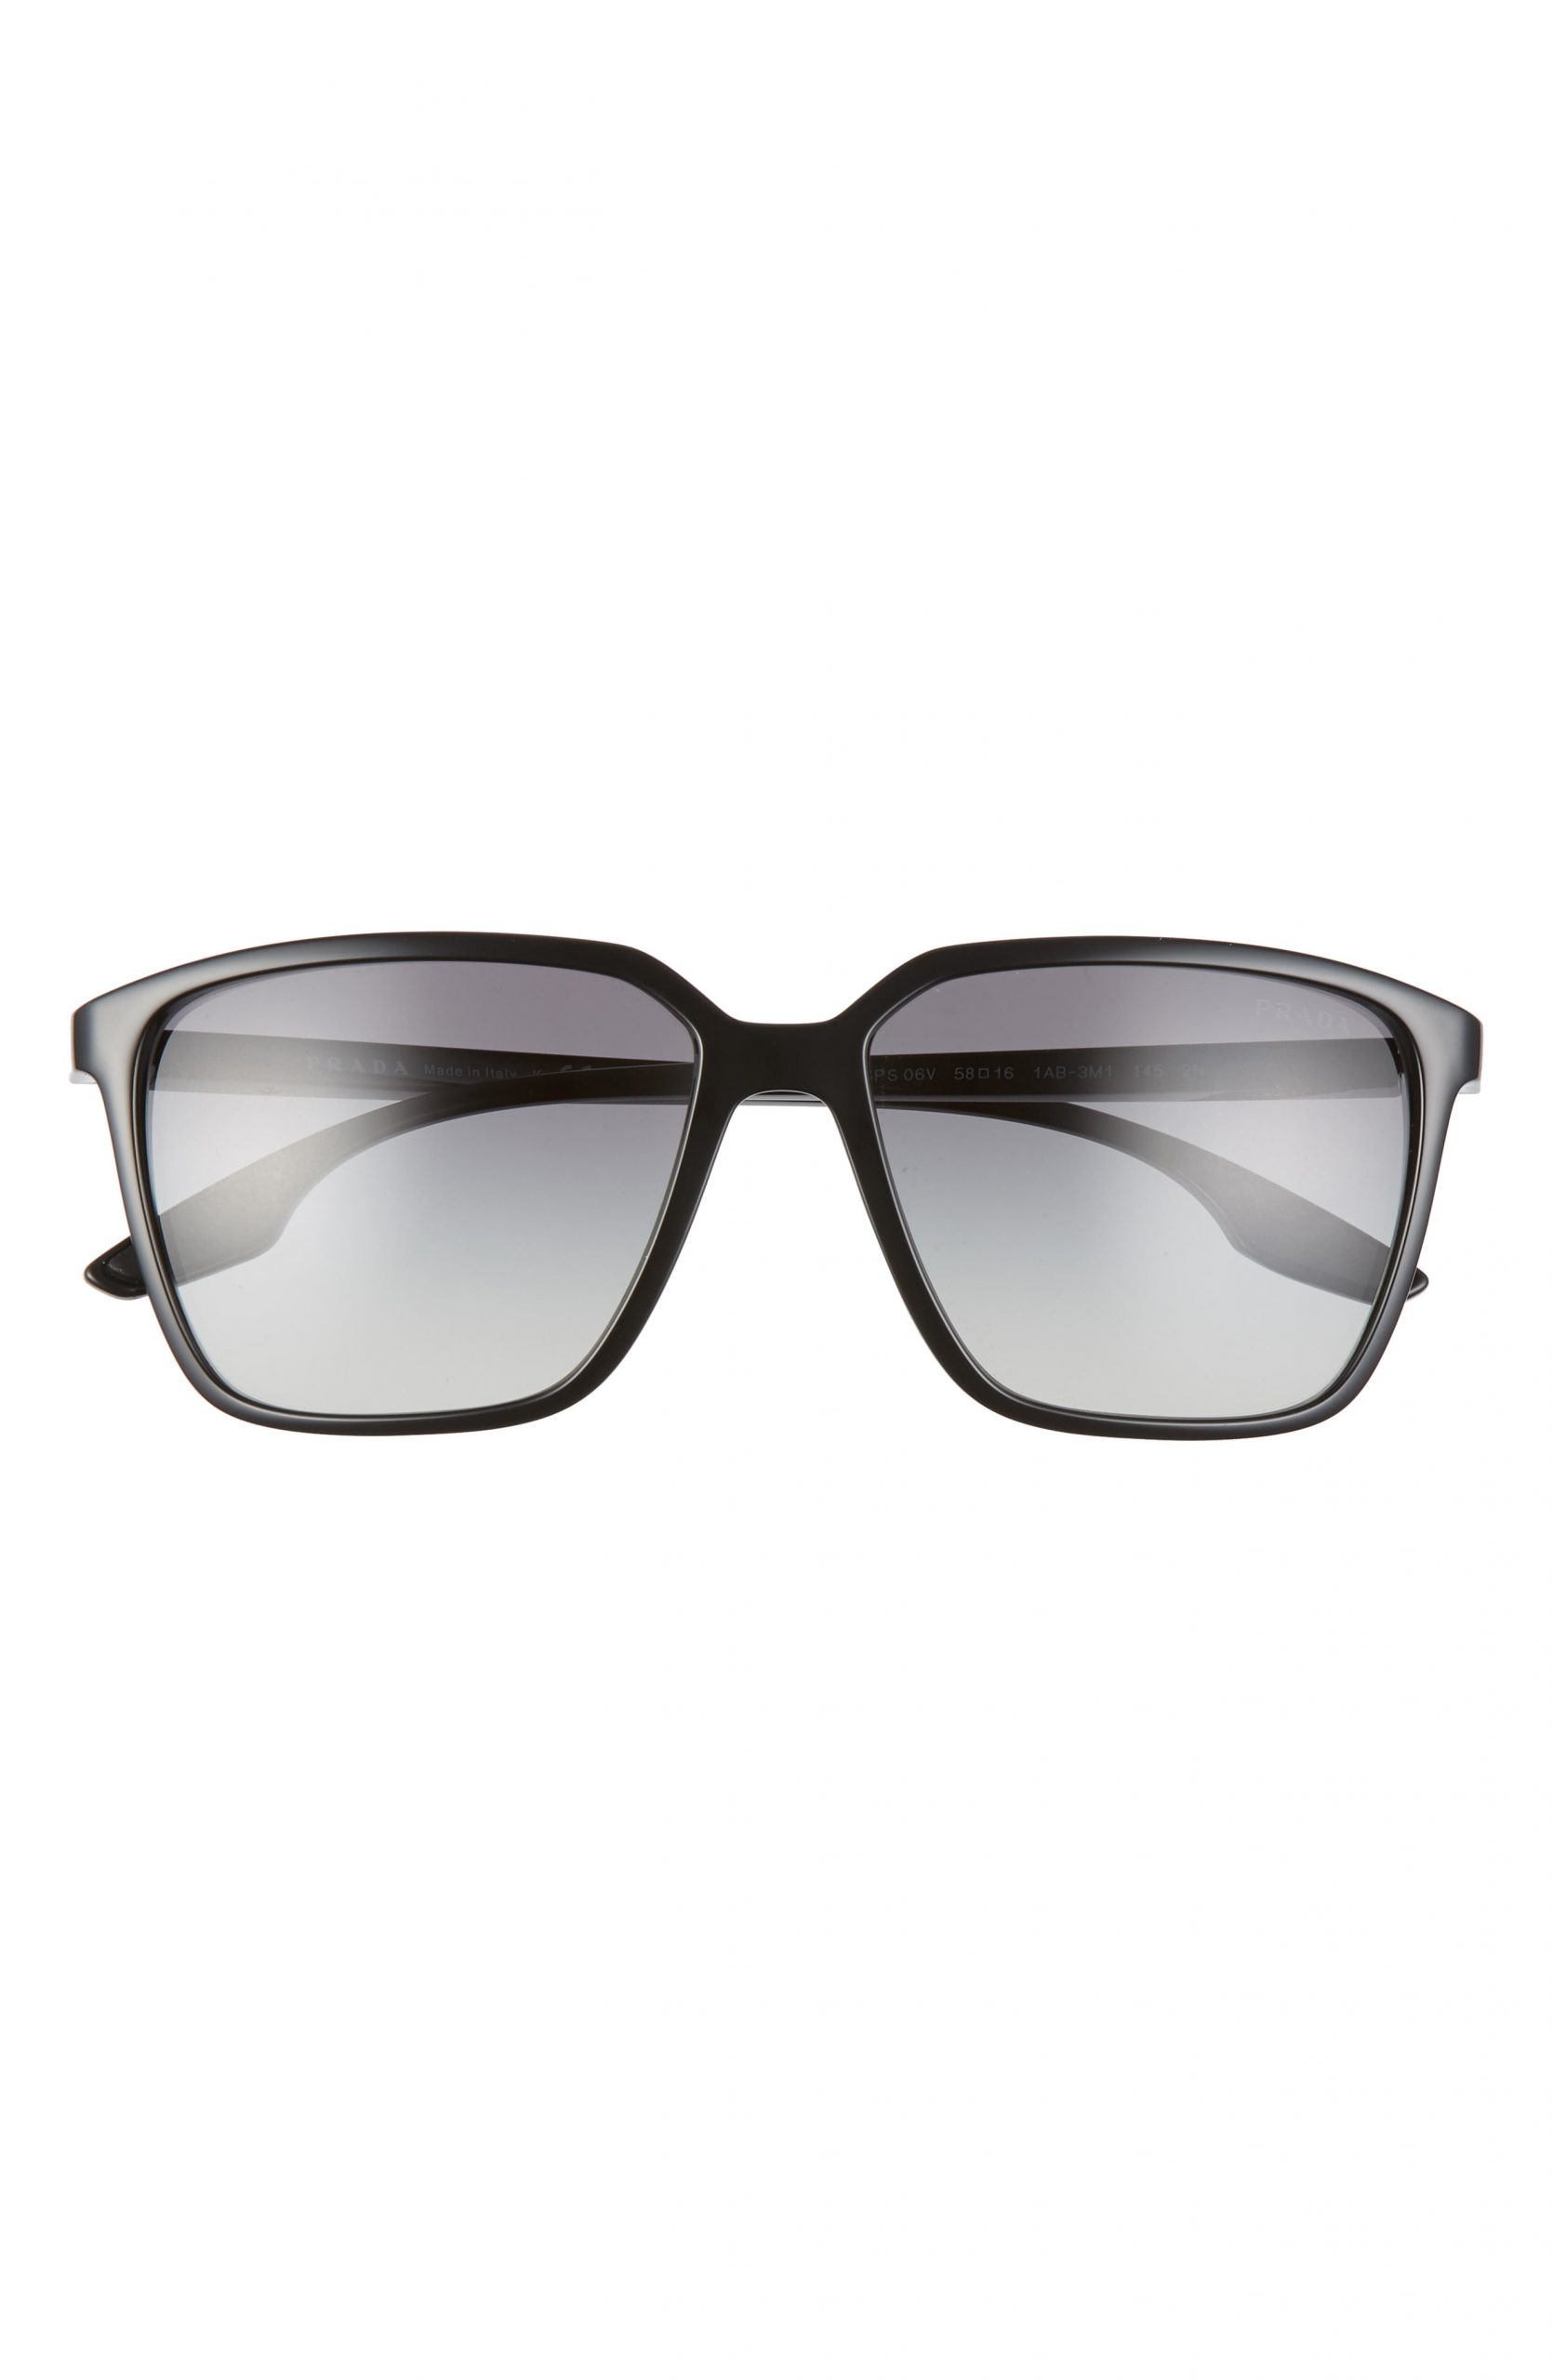 Men’s Prada 58mm Square Sunglasses - Black/ Grey Gradient | The Fashionisto